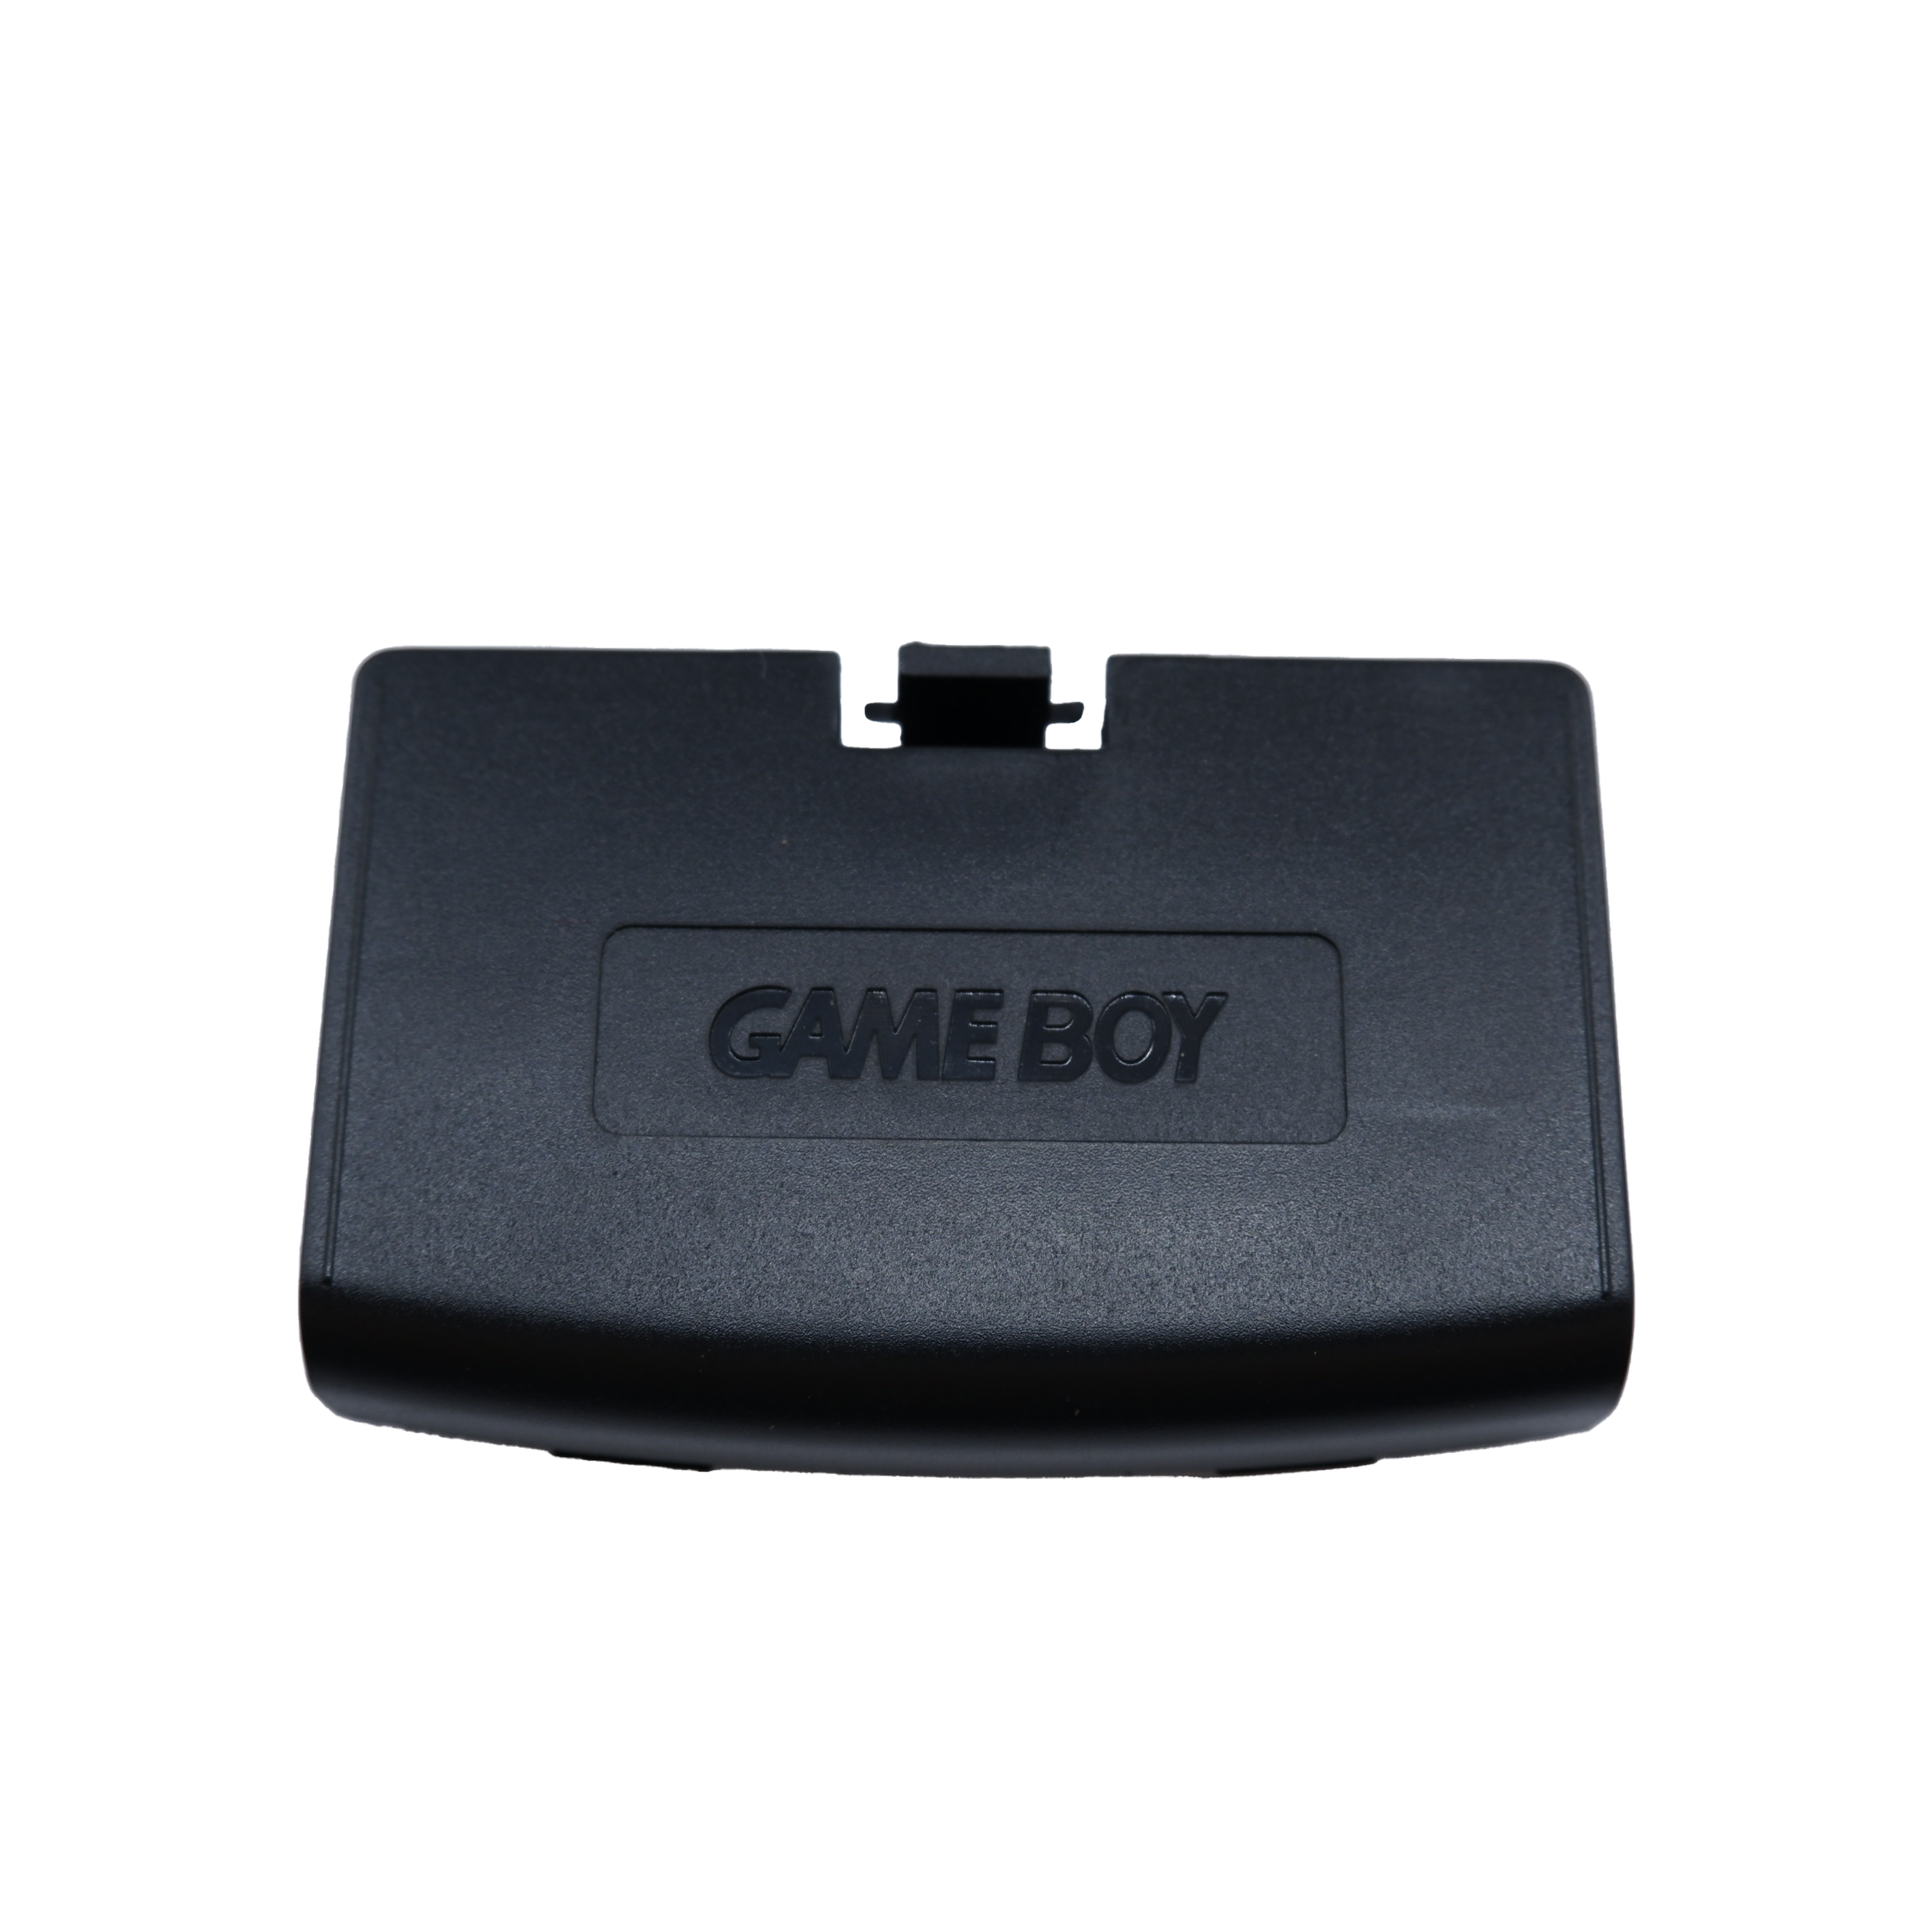 Game boy Advance GBA battery door cover AUS Australia